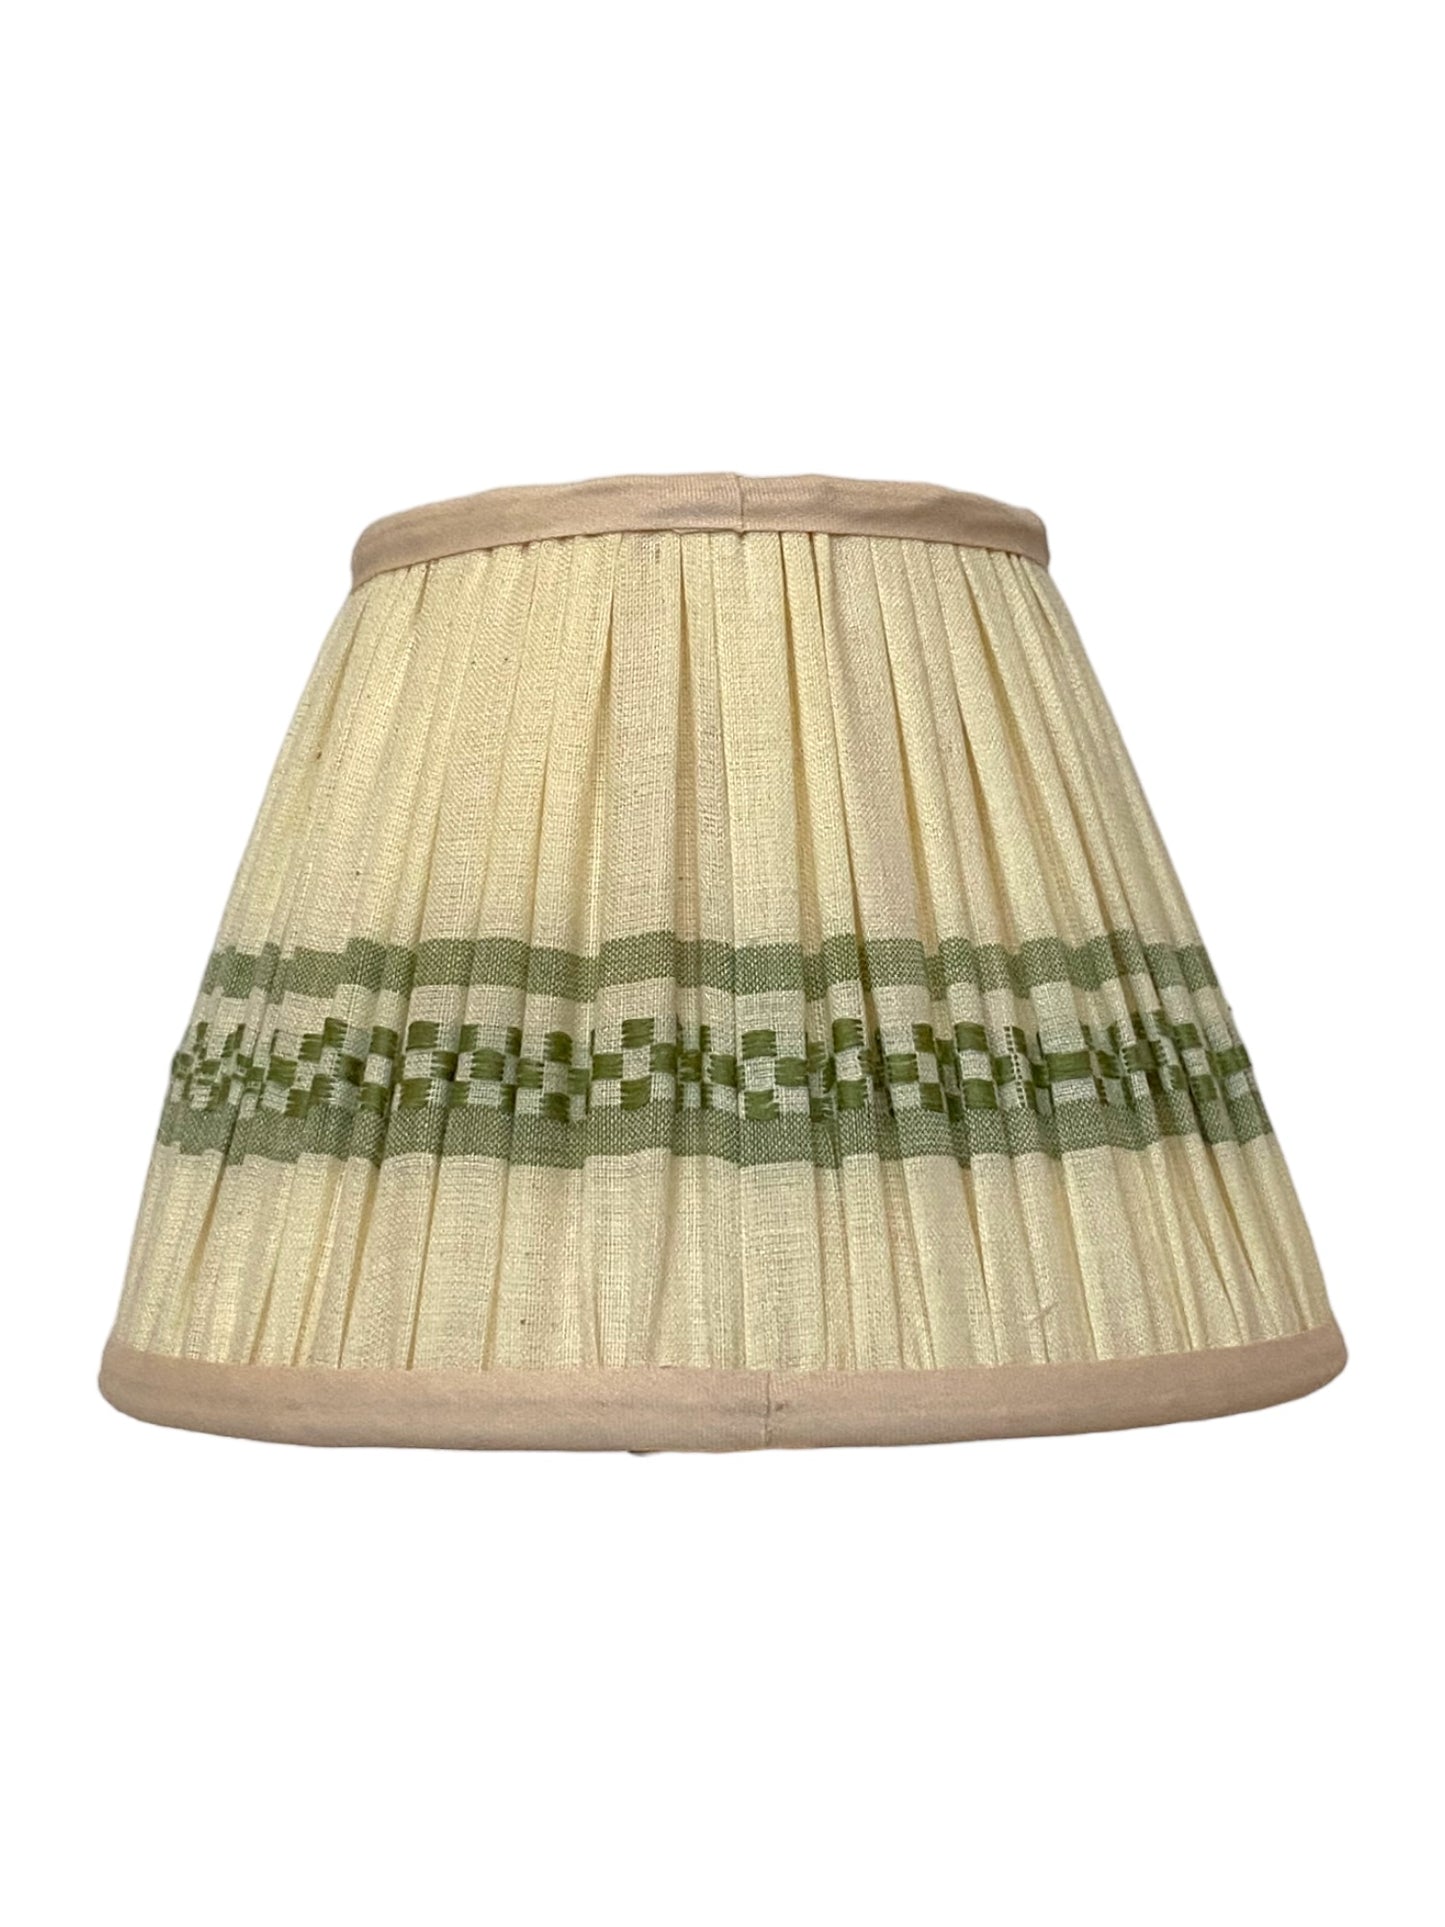 Assam green Cotton lampshade 18cm